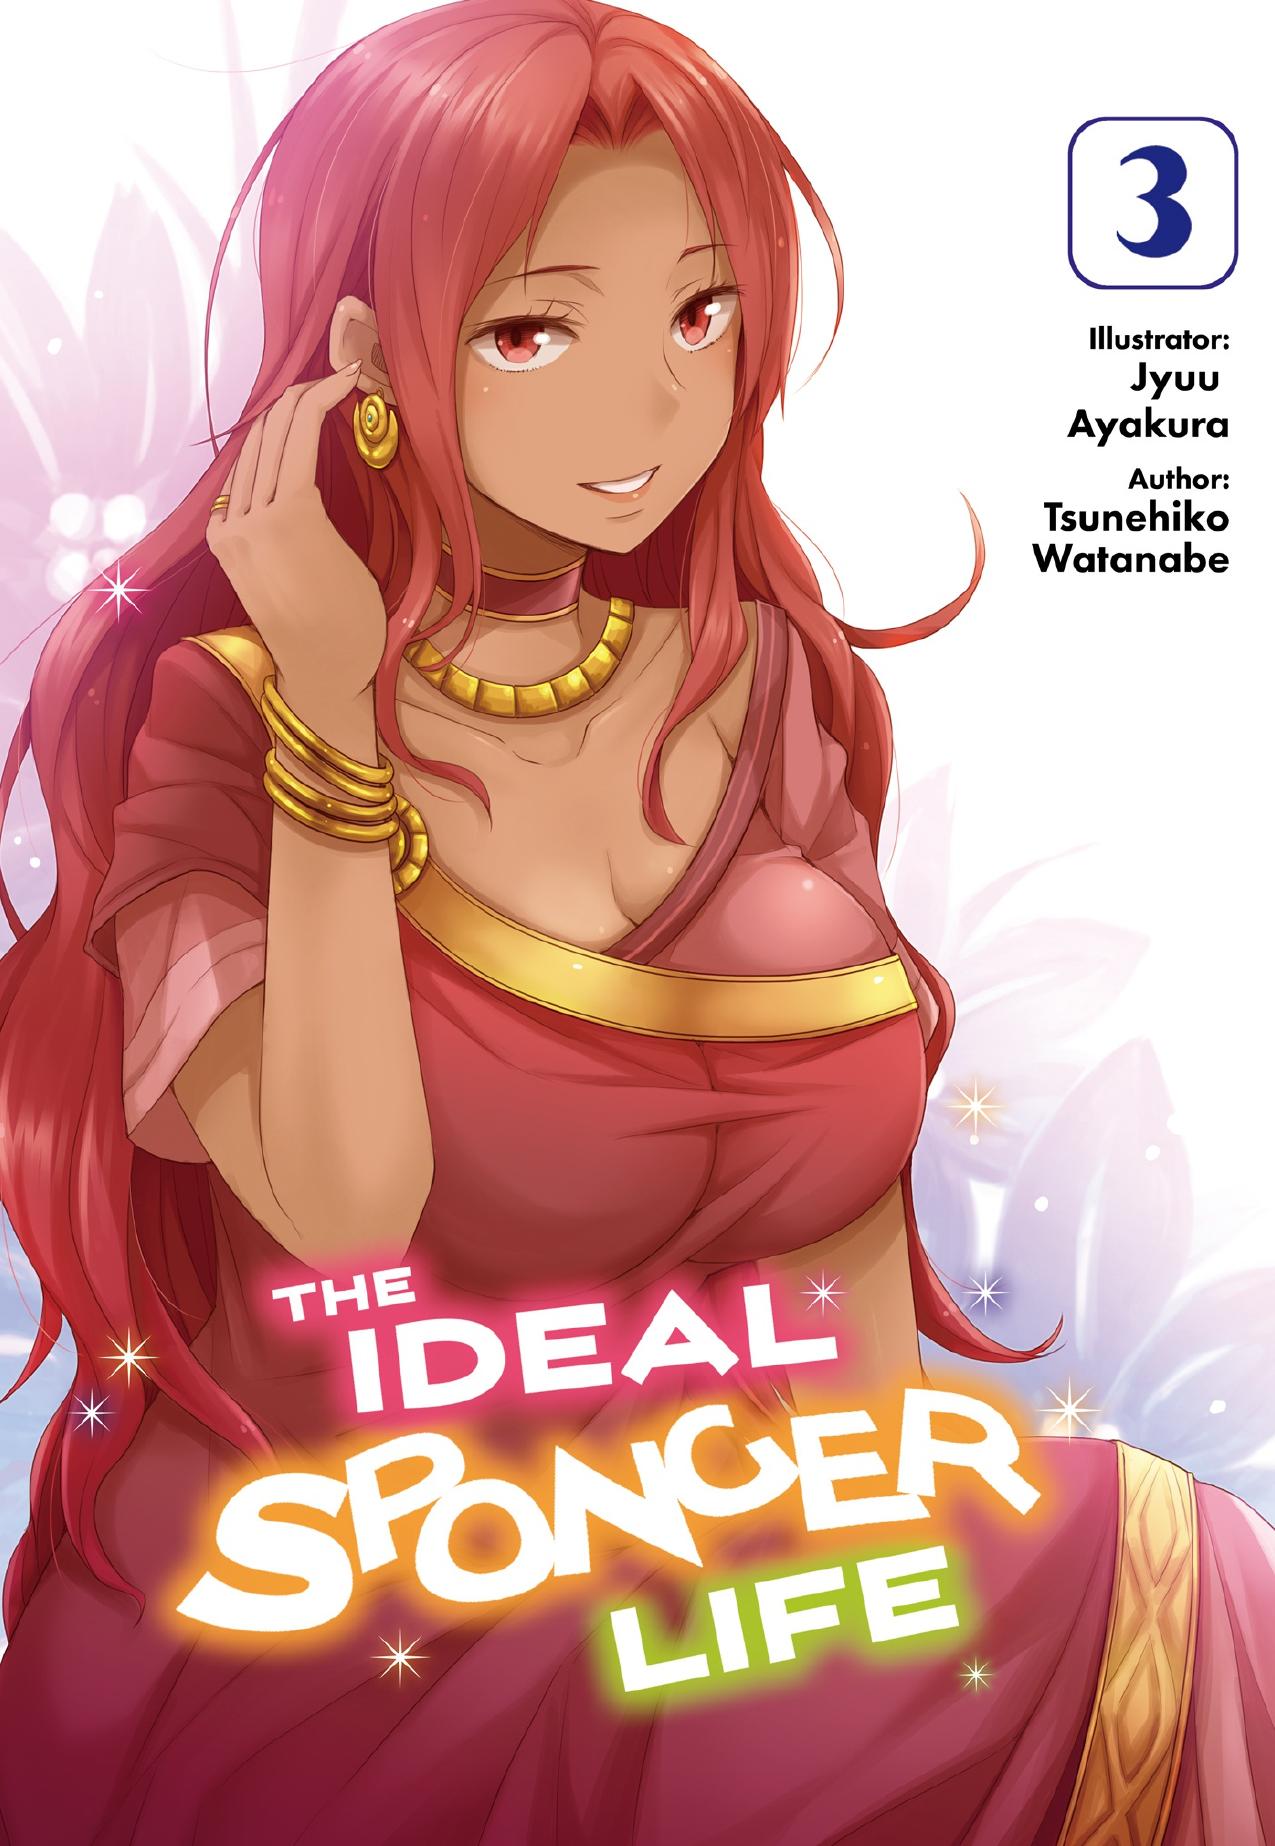 The Ideal Sponger Life: Volume 3 by Tsunehiko Watanabe